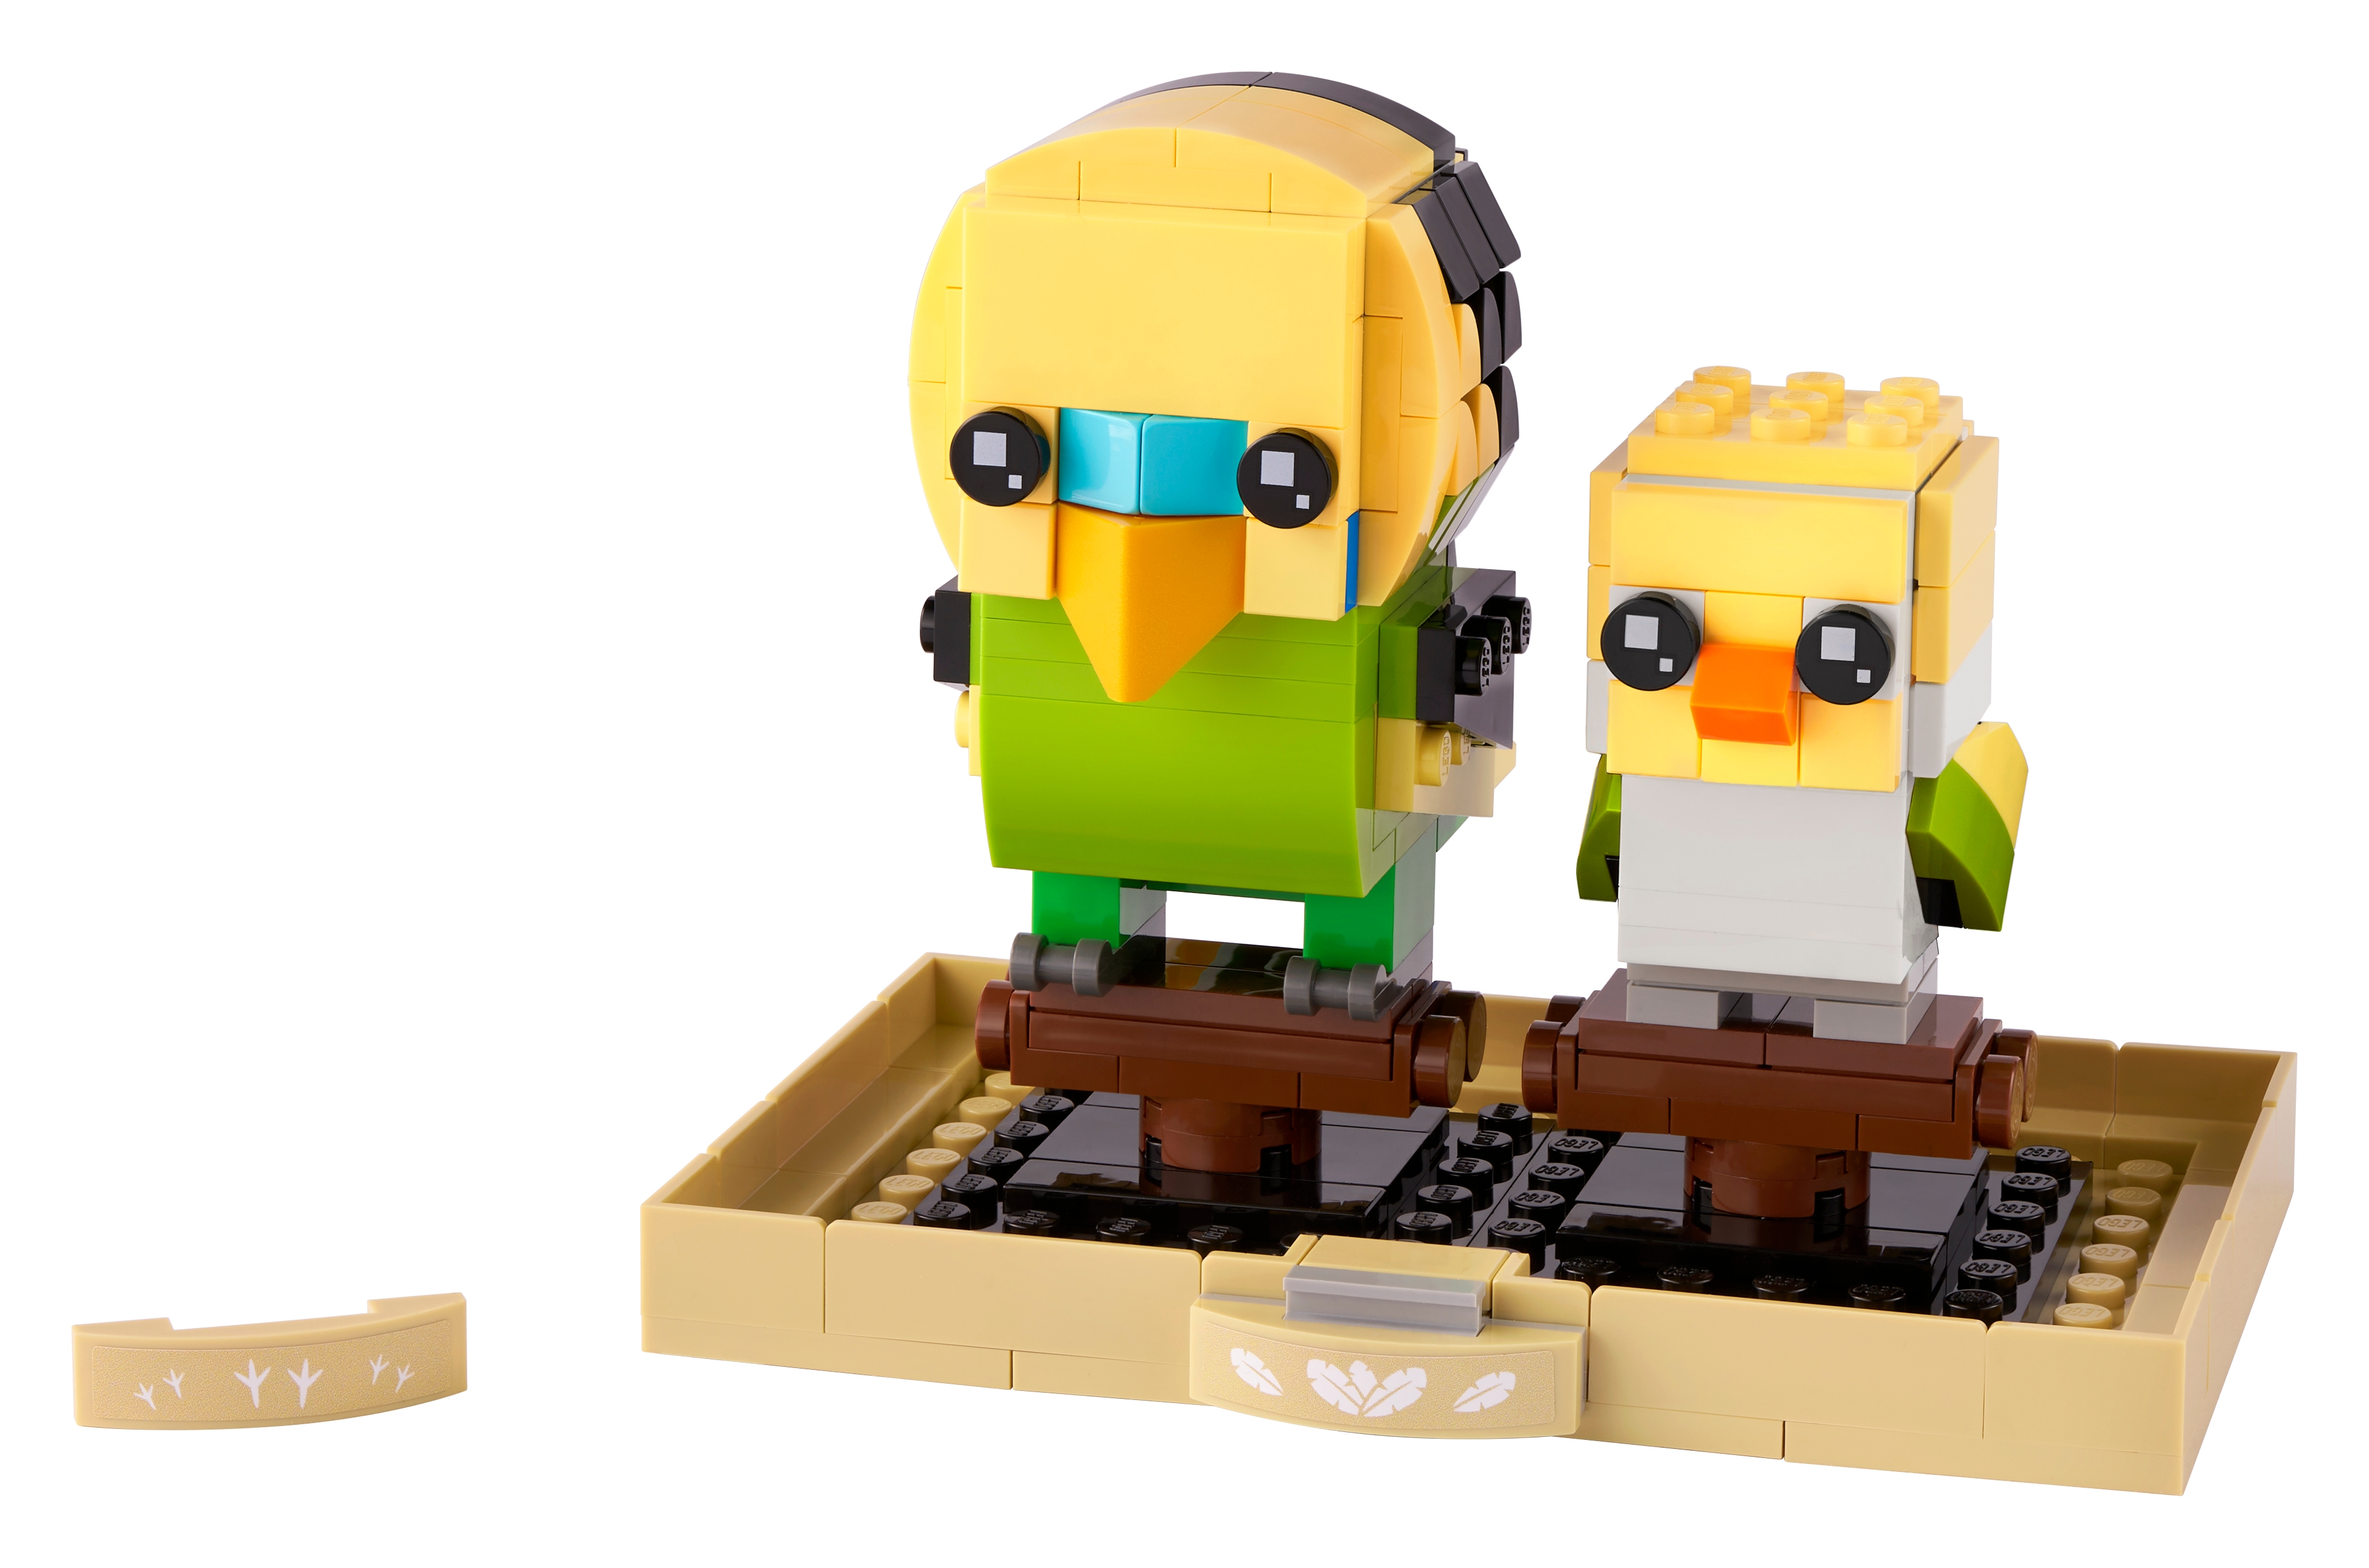 LEGO BrickHeadz 40443 - Papużka